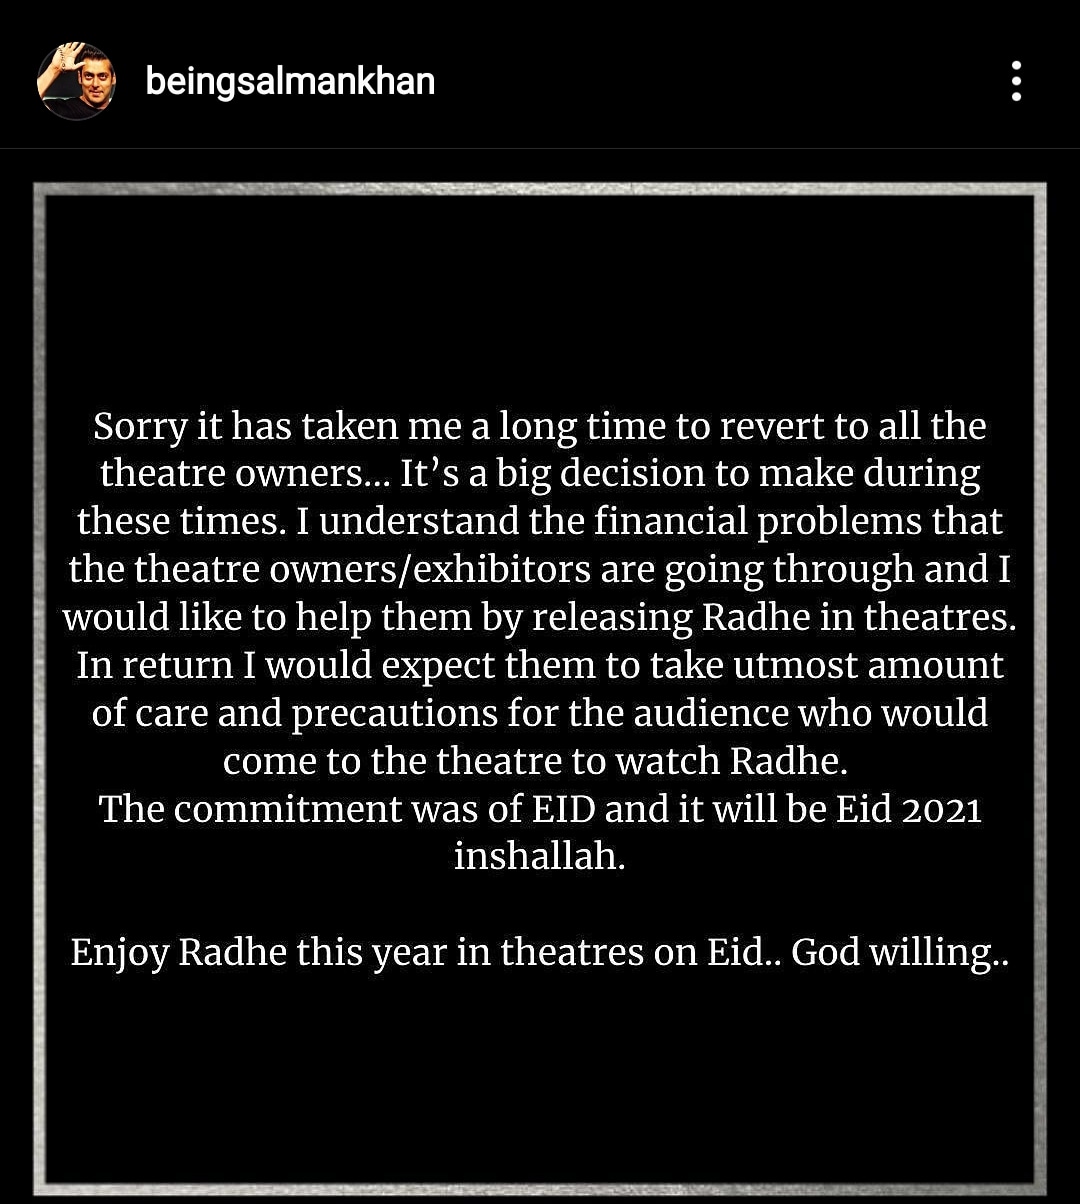 salman khan's statement about the movie Radhe